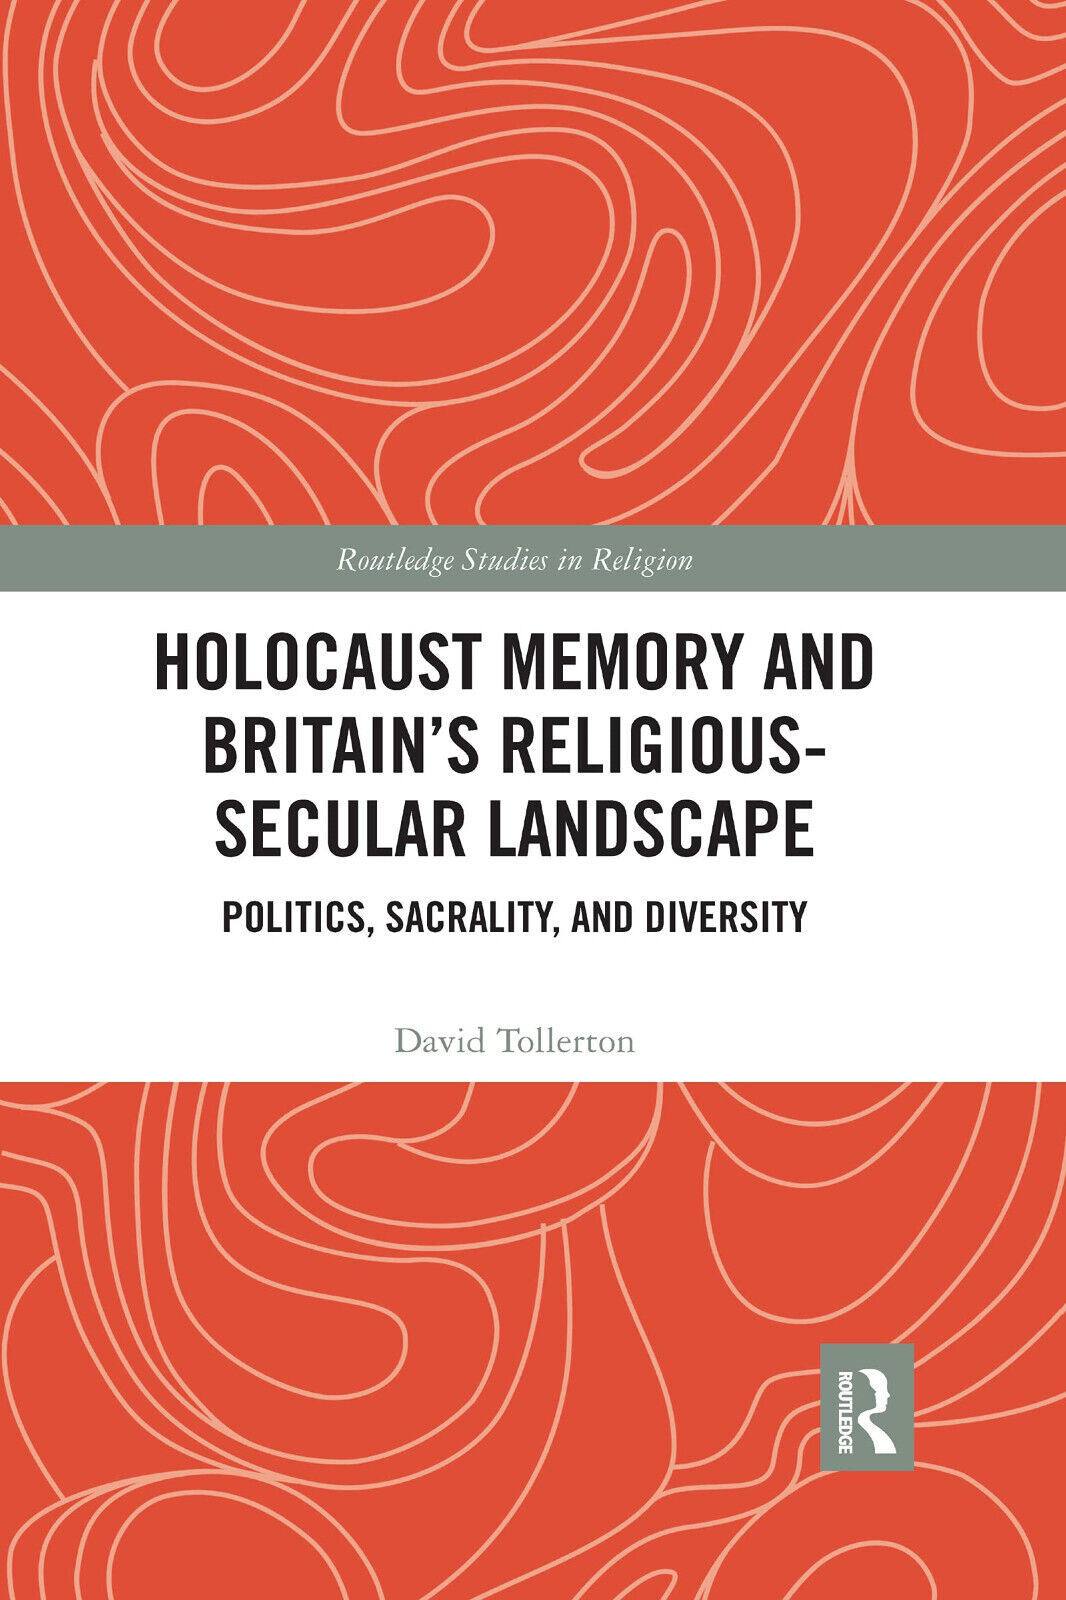 Holocaust Memory And Britain s Religious-Secular Landscape-David Tollerton-2021